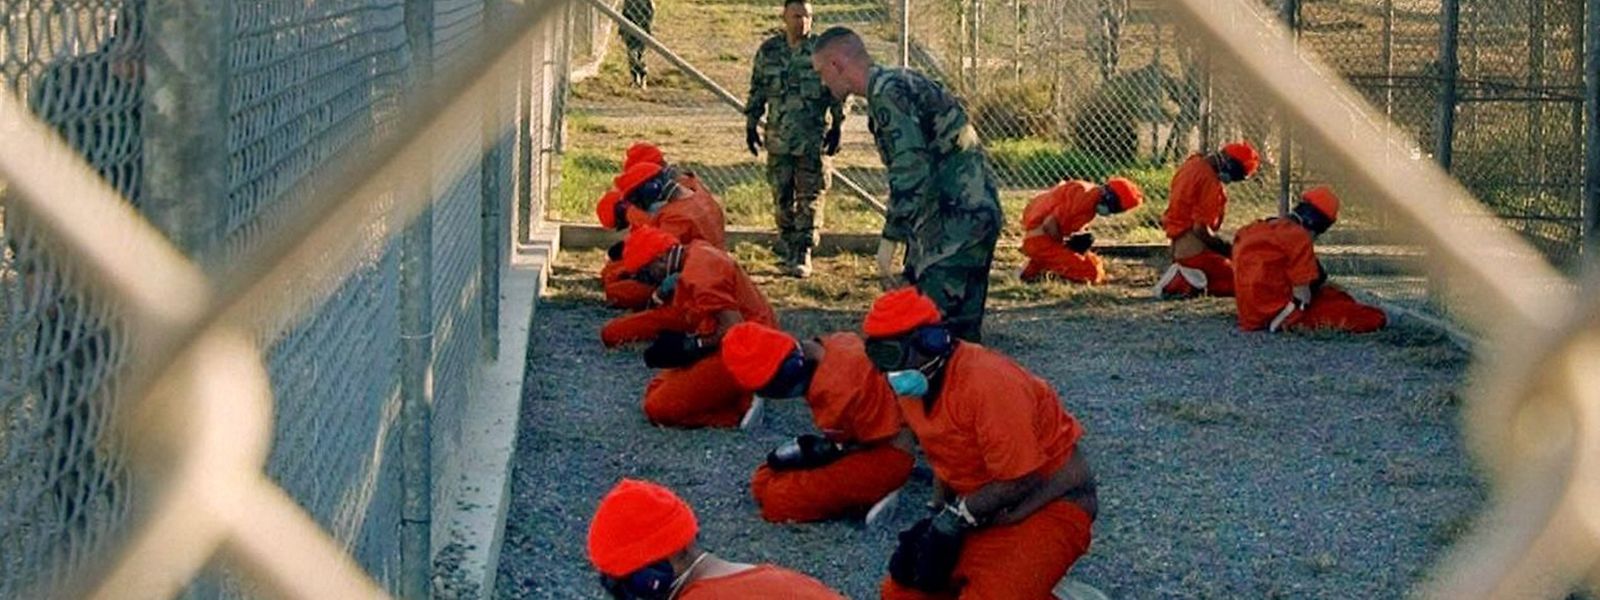 In orangefarbene Overalls gekleidete Häftlinge knien im US-Gefangenenlager Guantánamo.